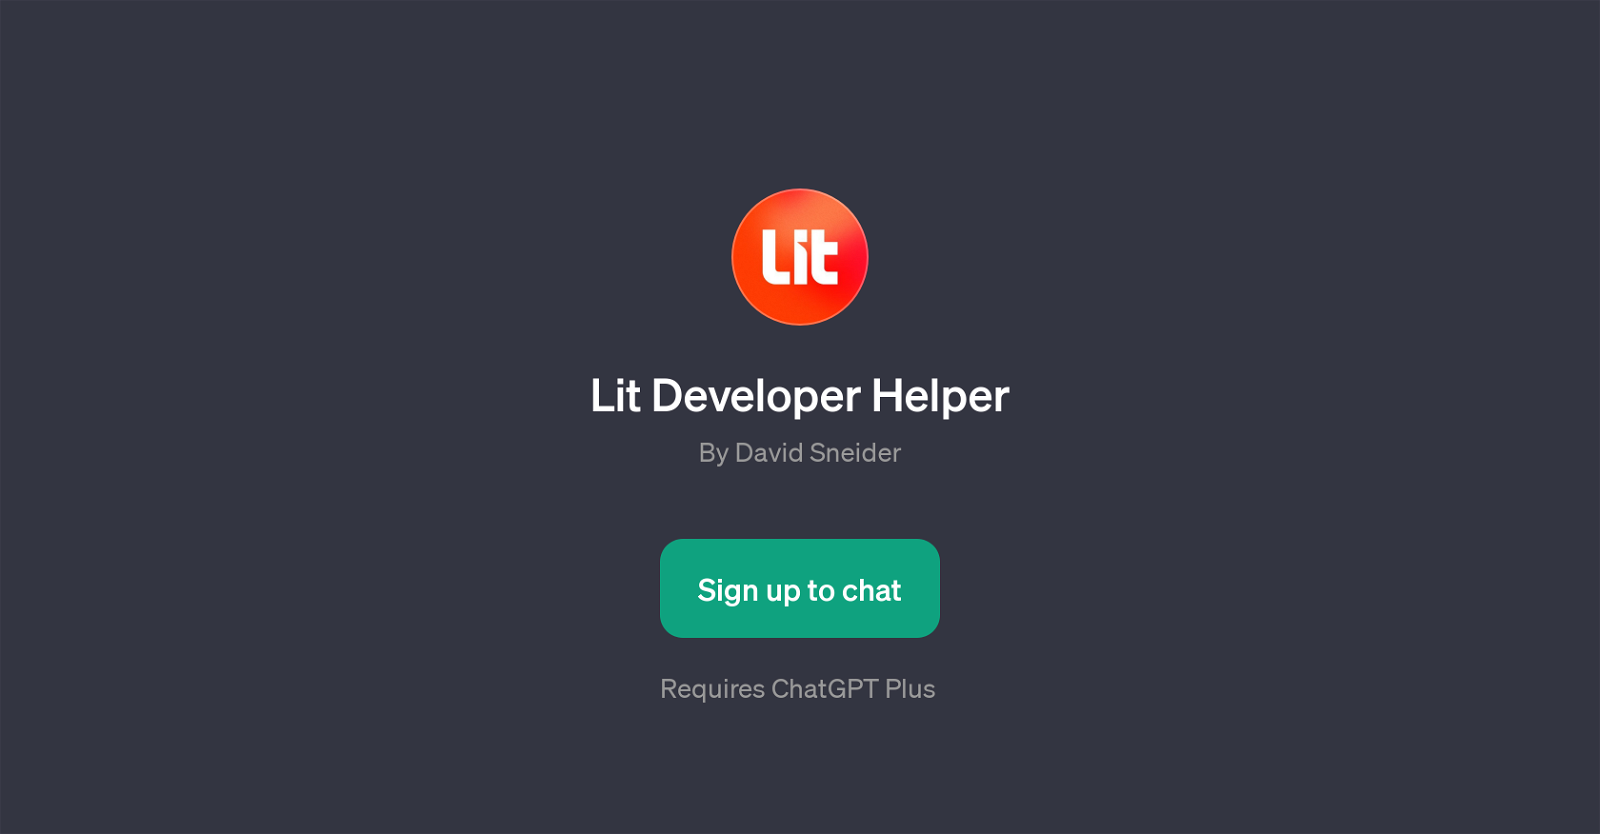 Lit Developer Helper website